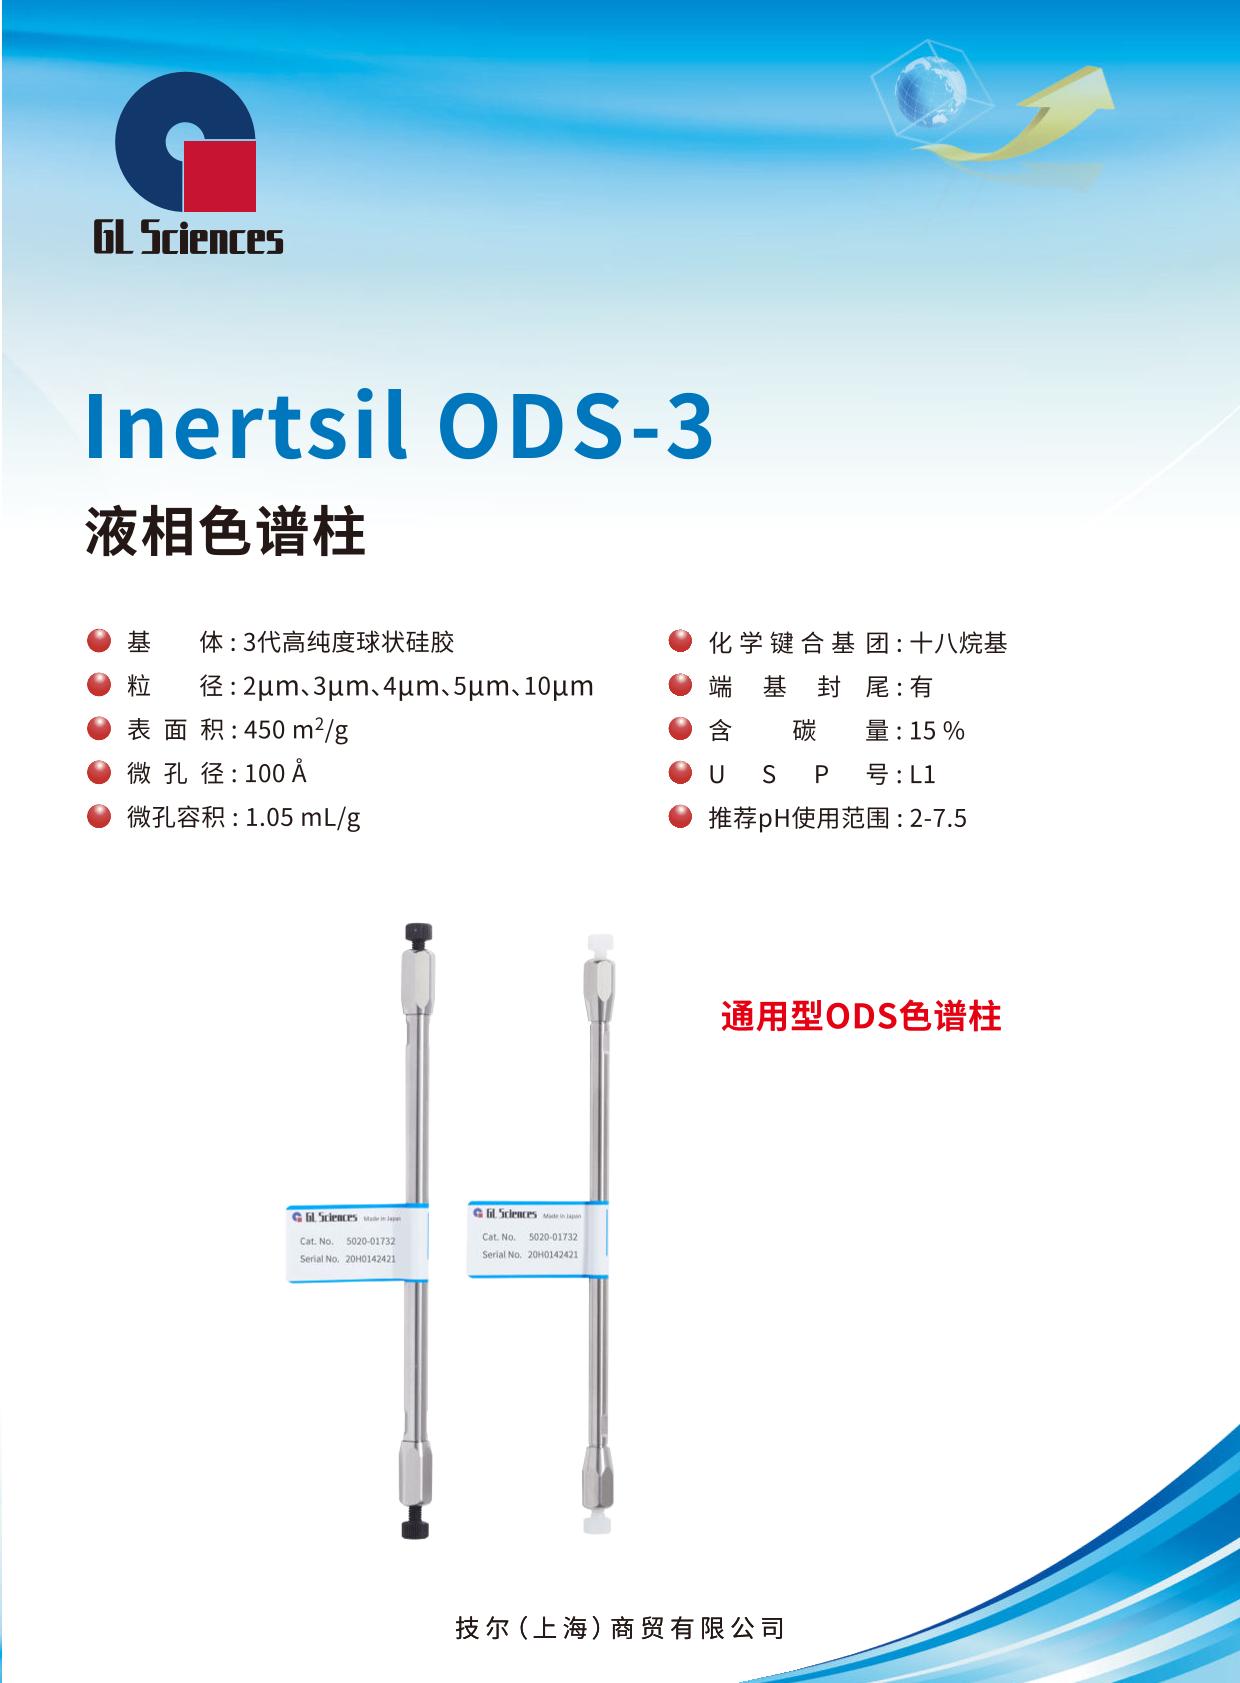 GL003 Inertsil ODS-3